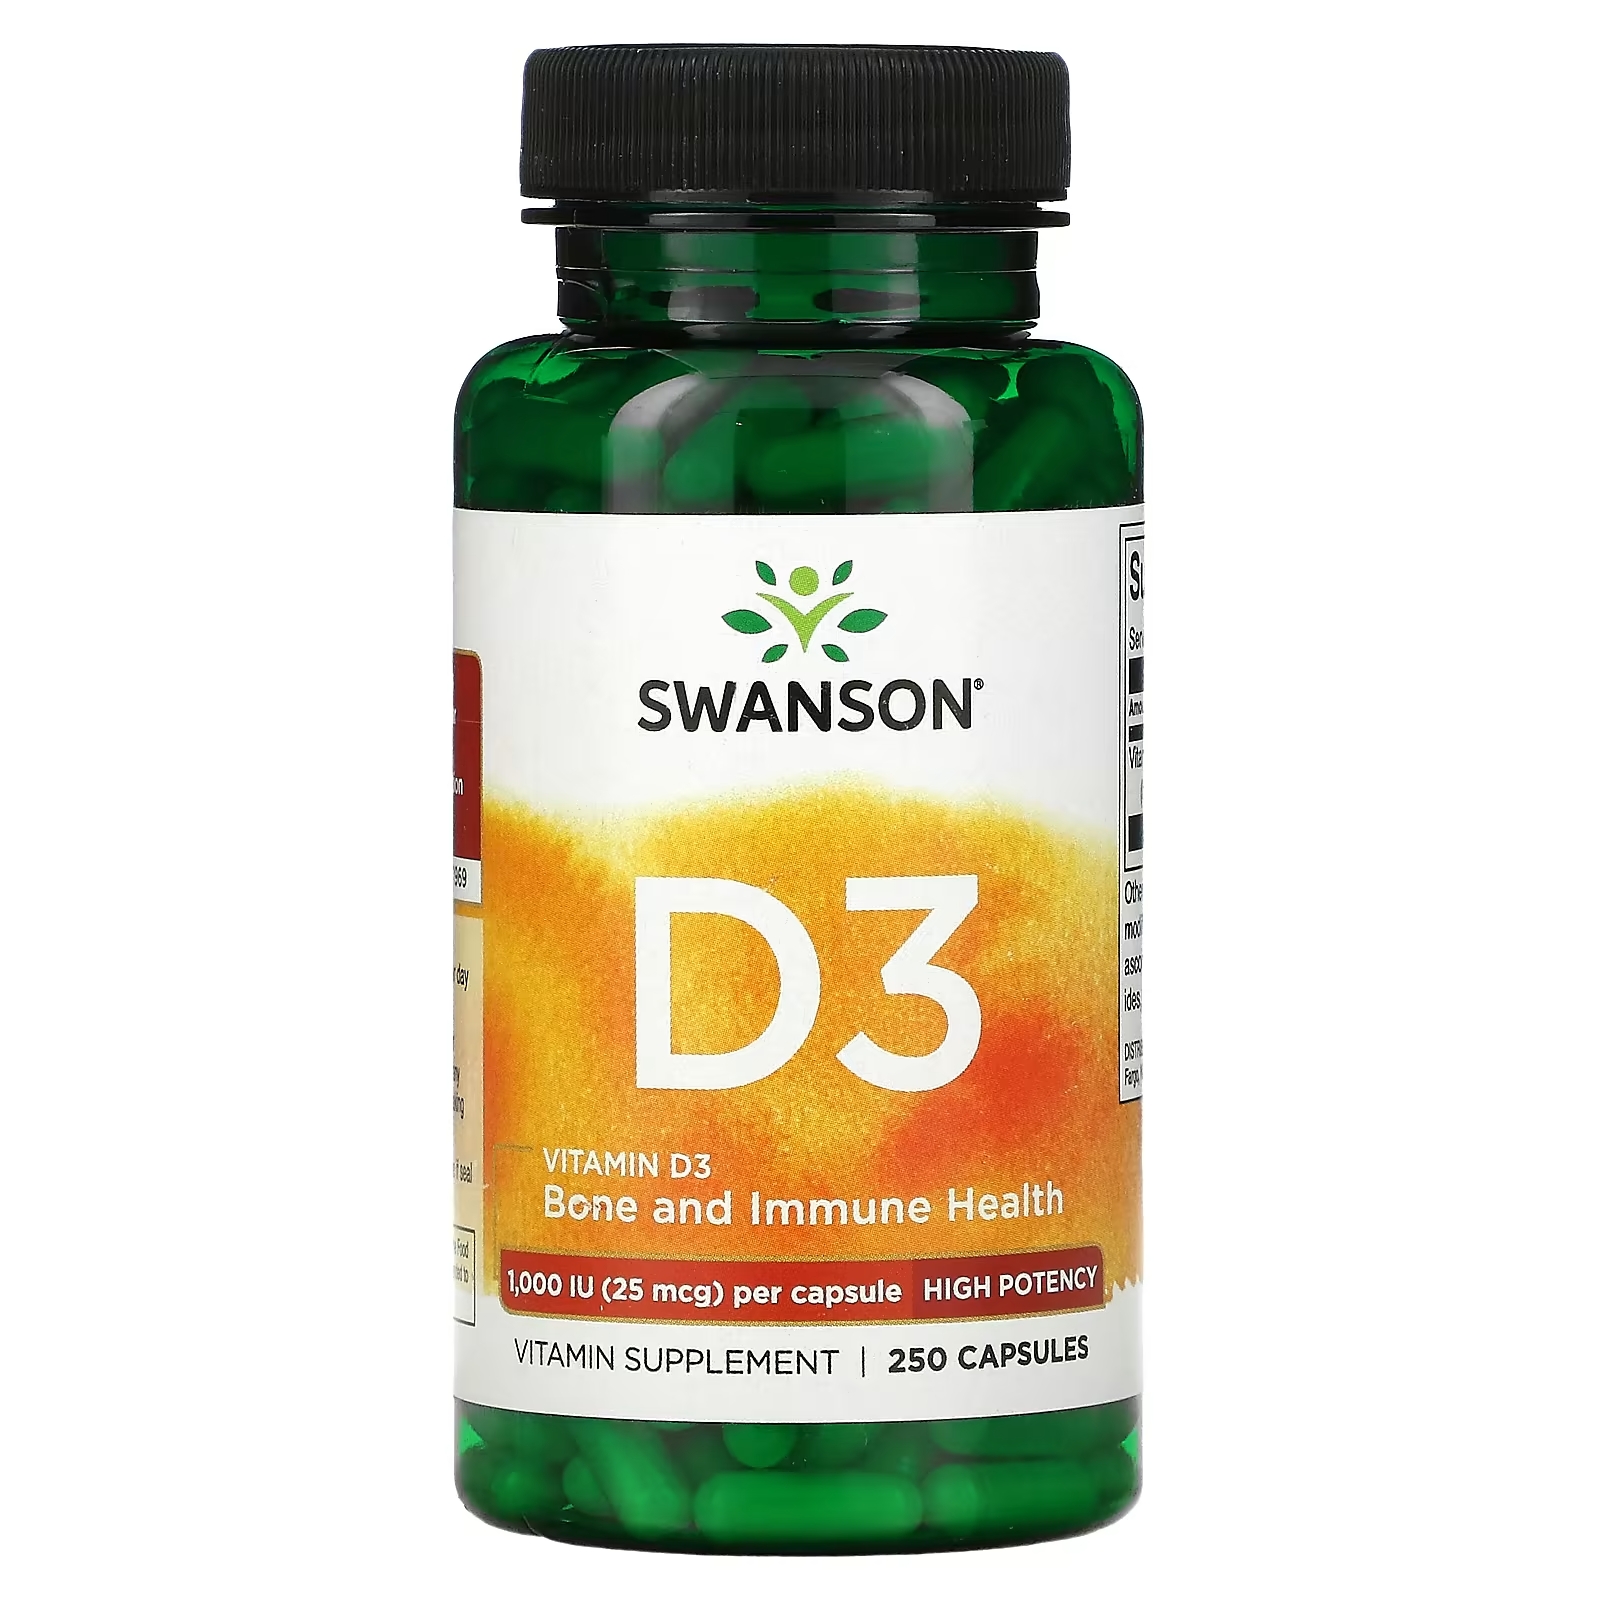 Swanson витамин D3 1000 МЕ, 250 капсул swanson витамин d3 высокая эффективность 1000 ме 25 мкг 30 капсул